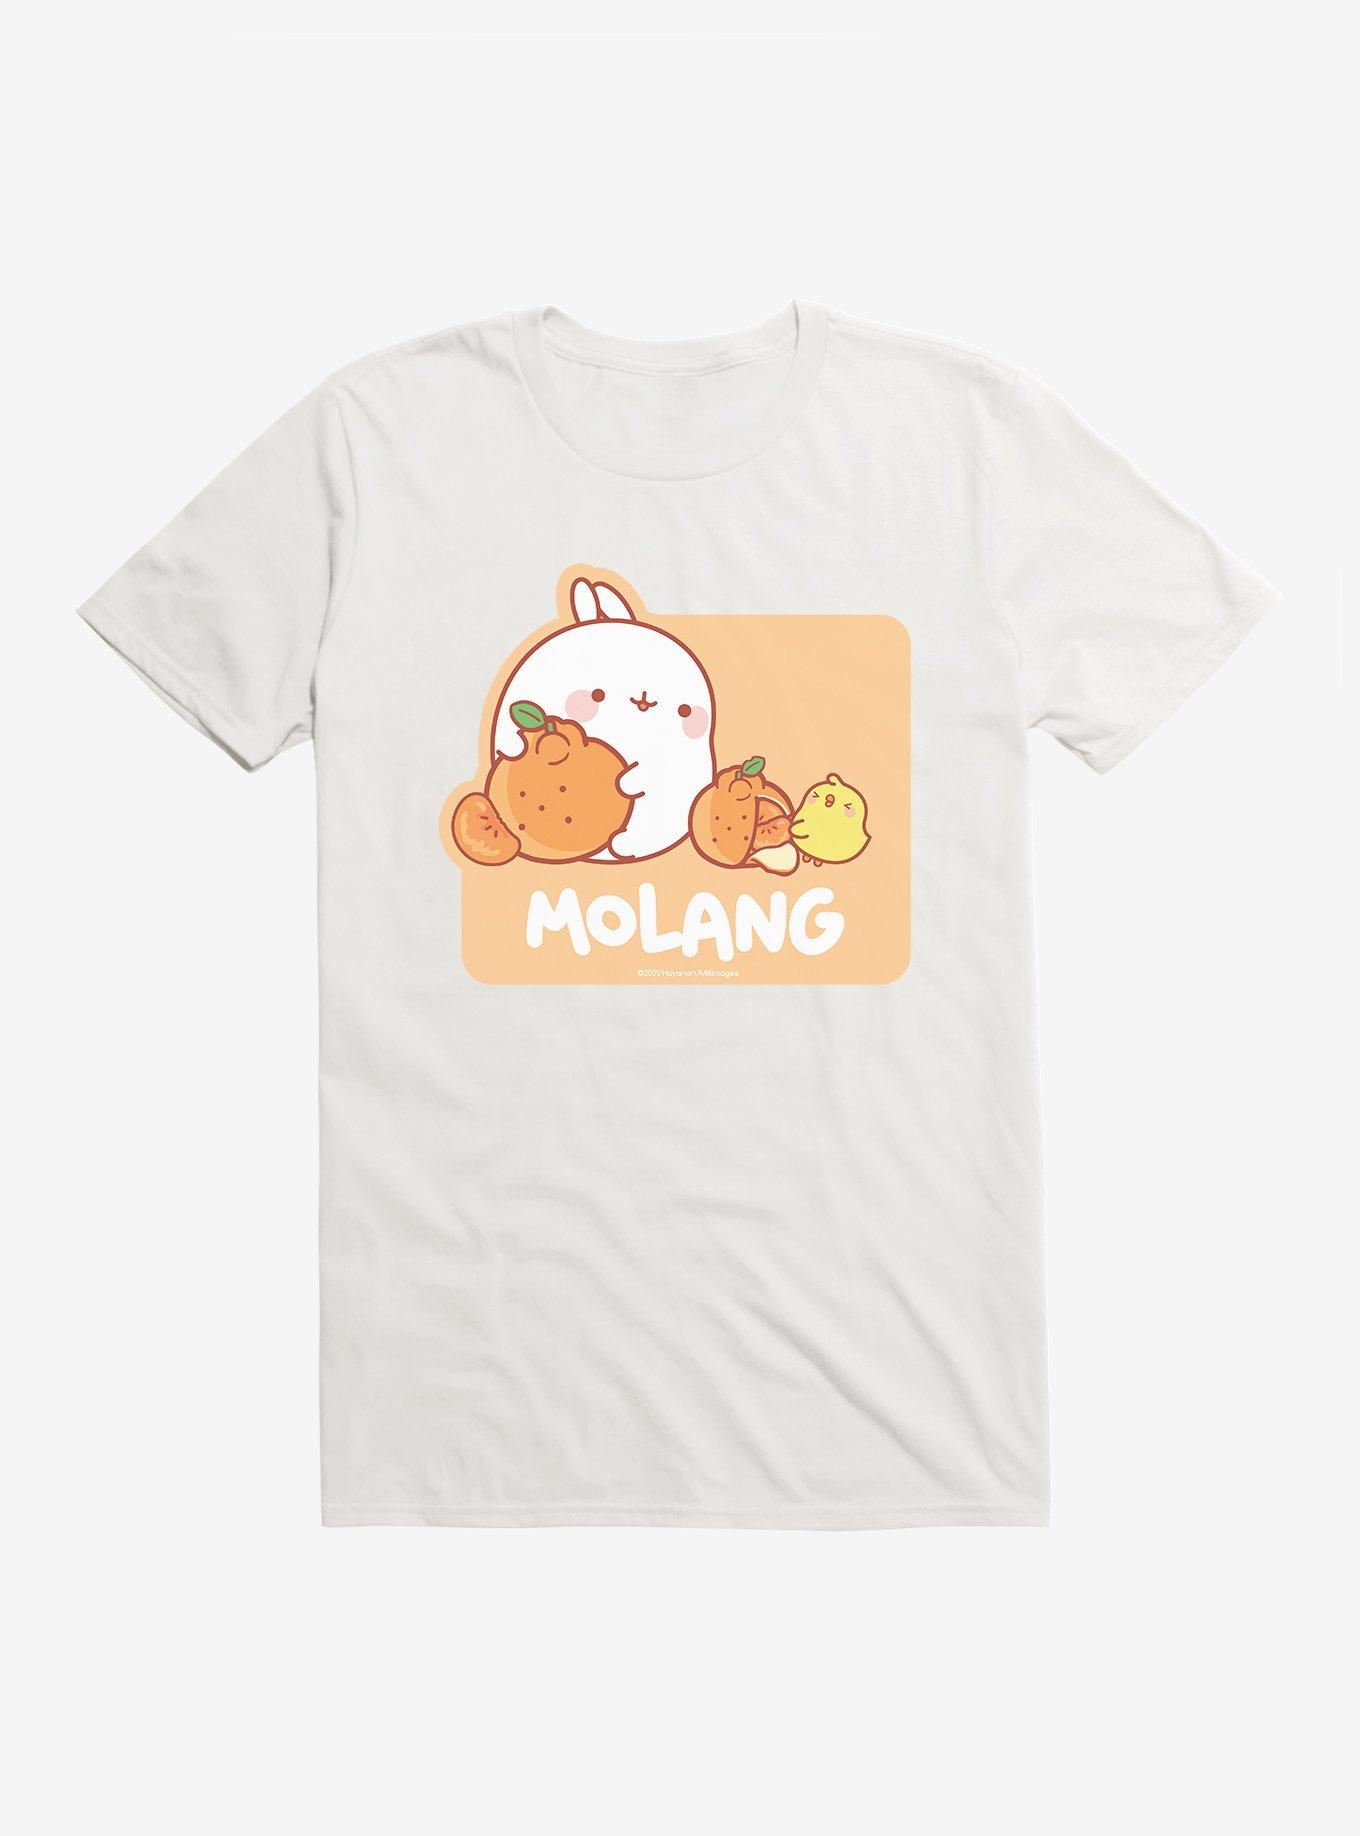 Molang Orange Hugs T-Shirt | Hot Topic